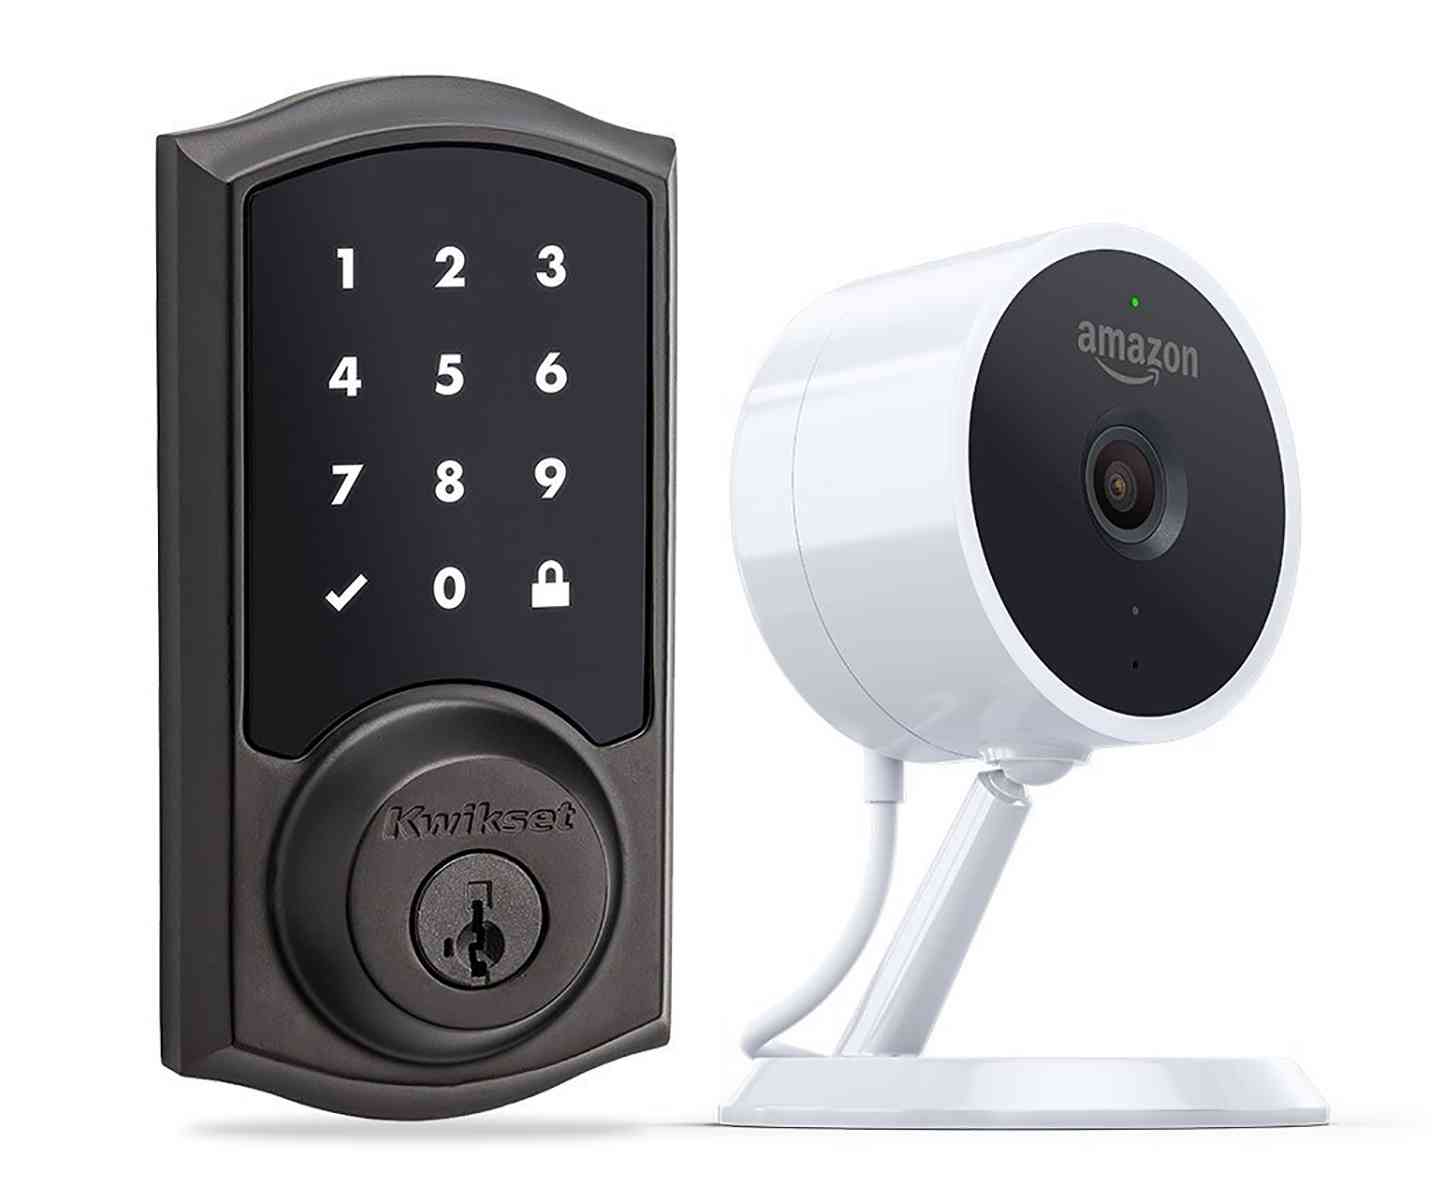 Amazon Key Home Kit smart lock